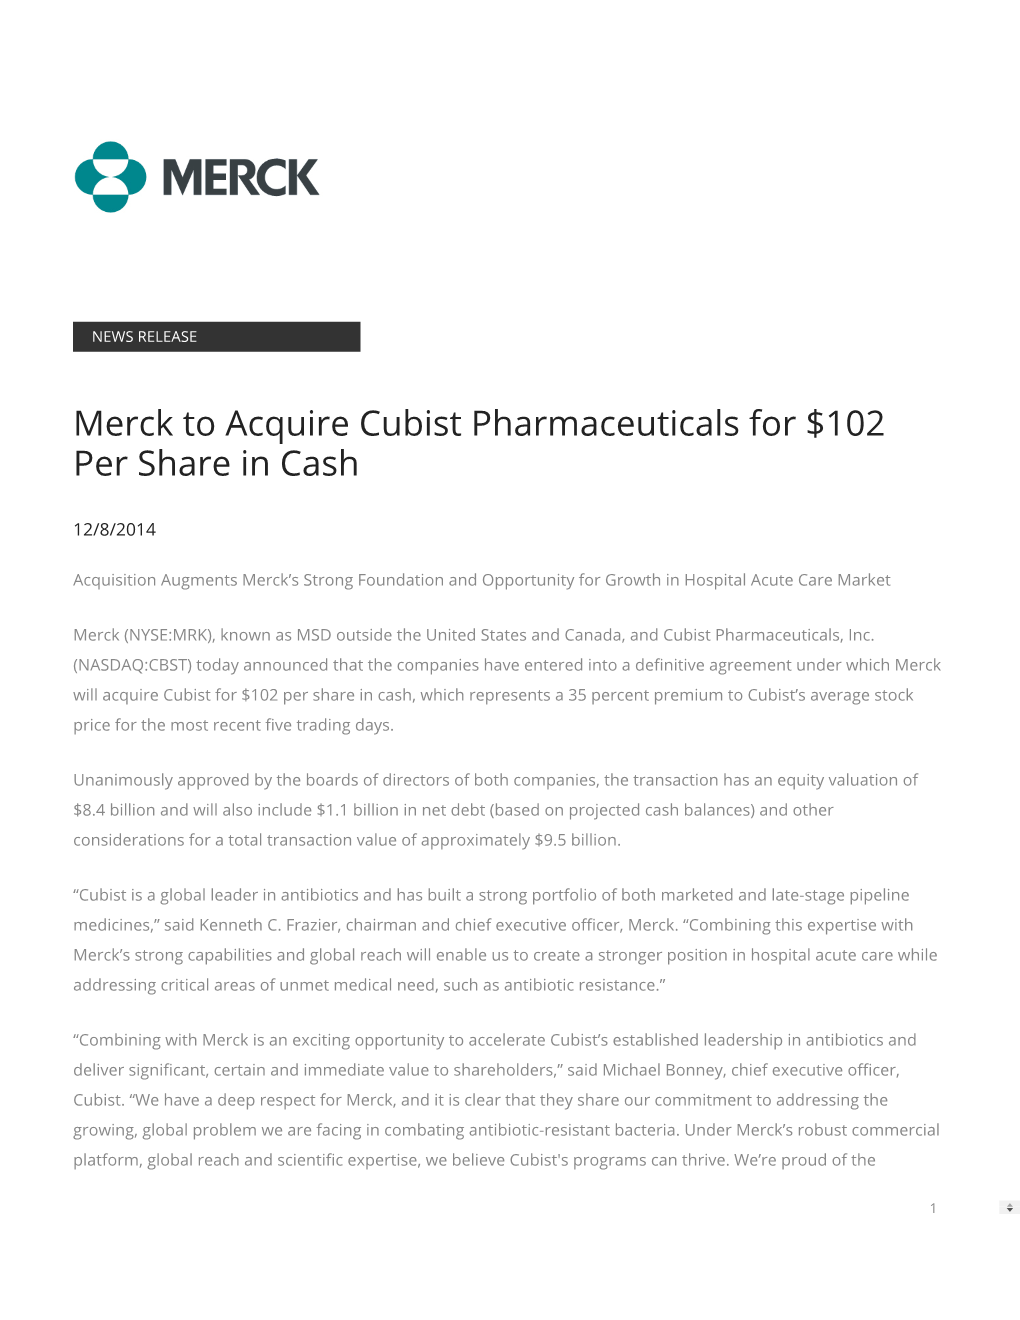 Merck to Acquire Cubist Pharmaceuticals for $102 Per Share in Cash